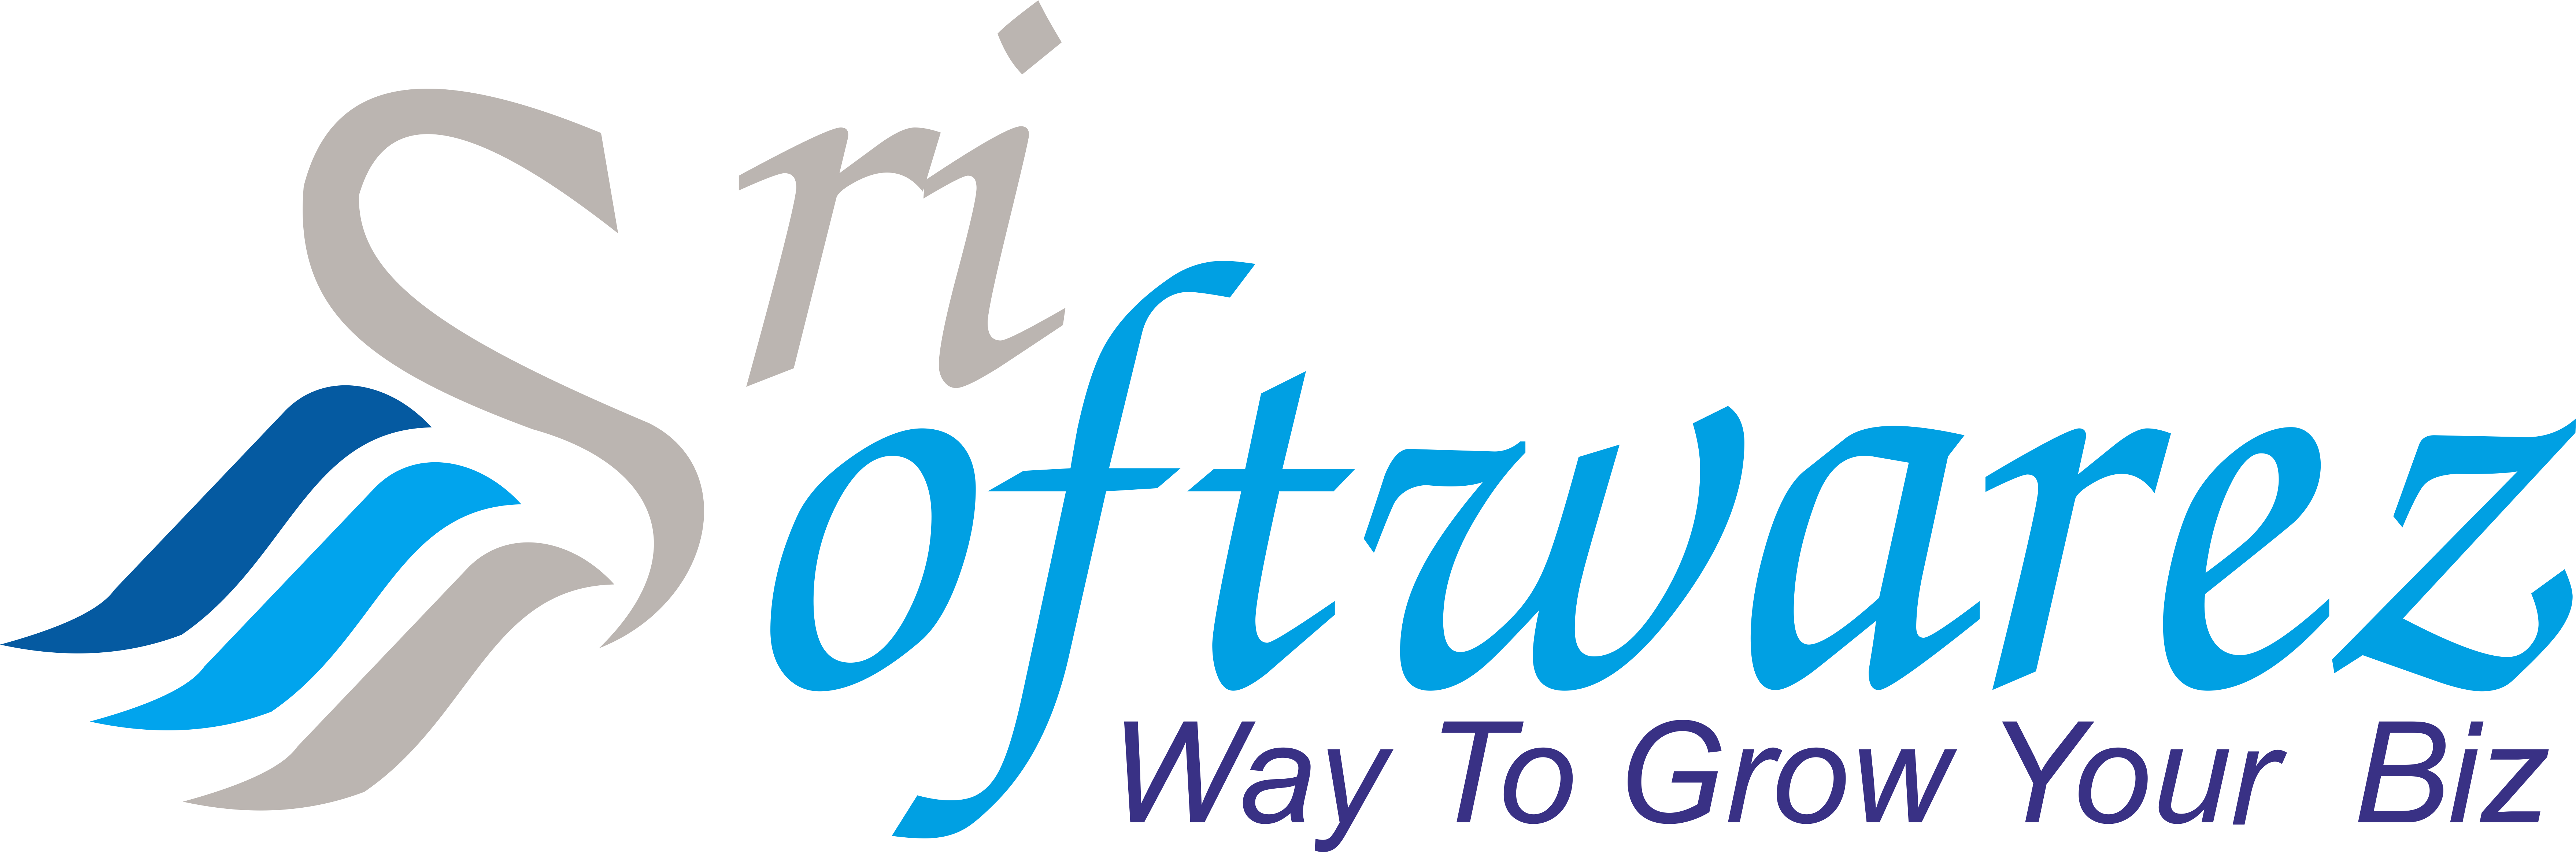 srisoftware logo